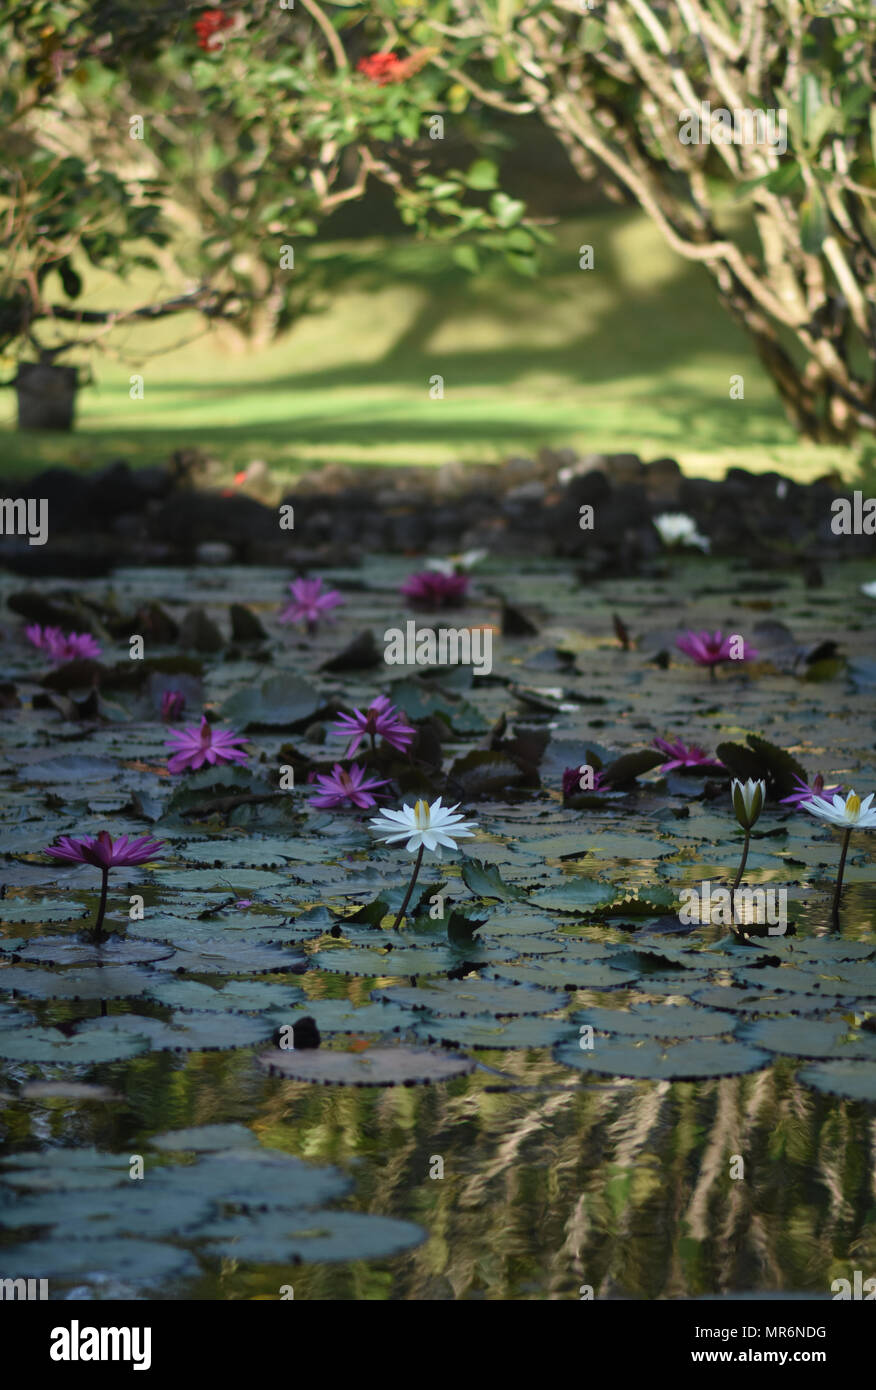 Lotus flower in Pond Stock Photo